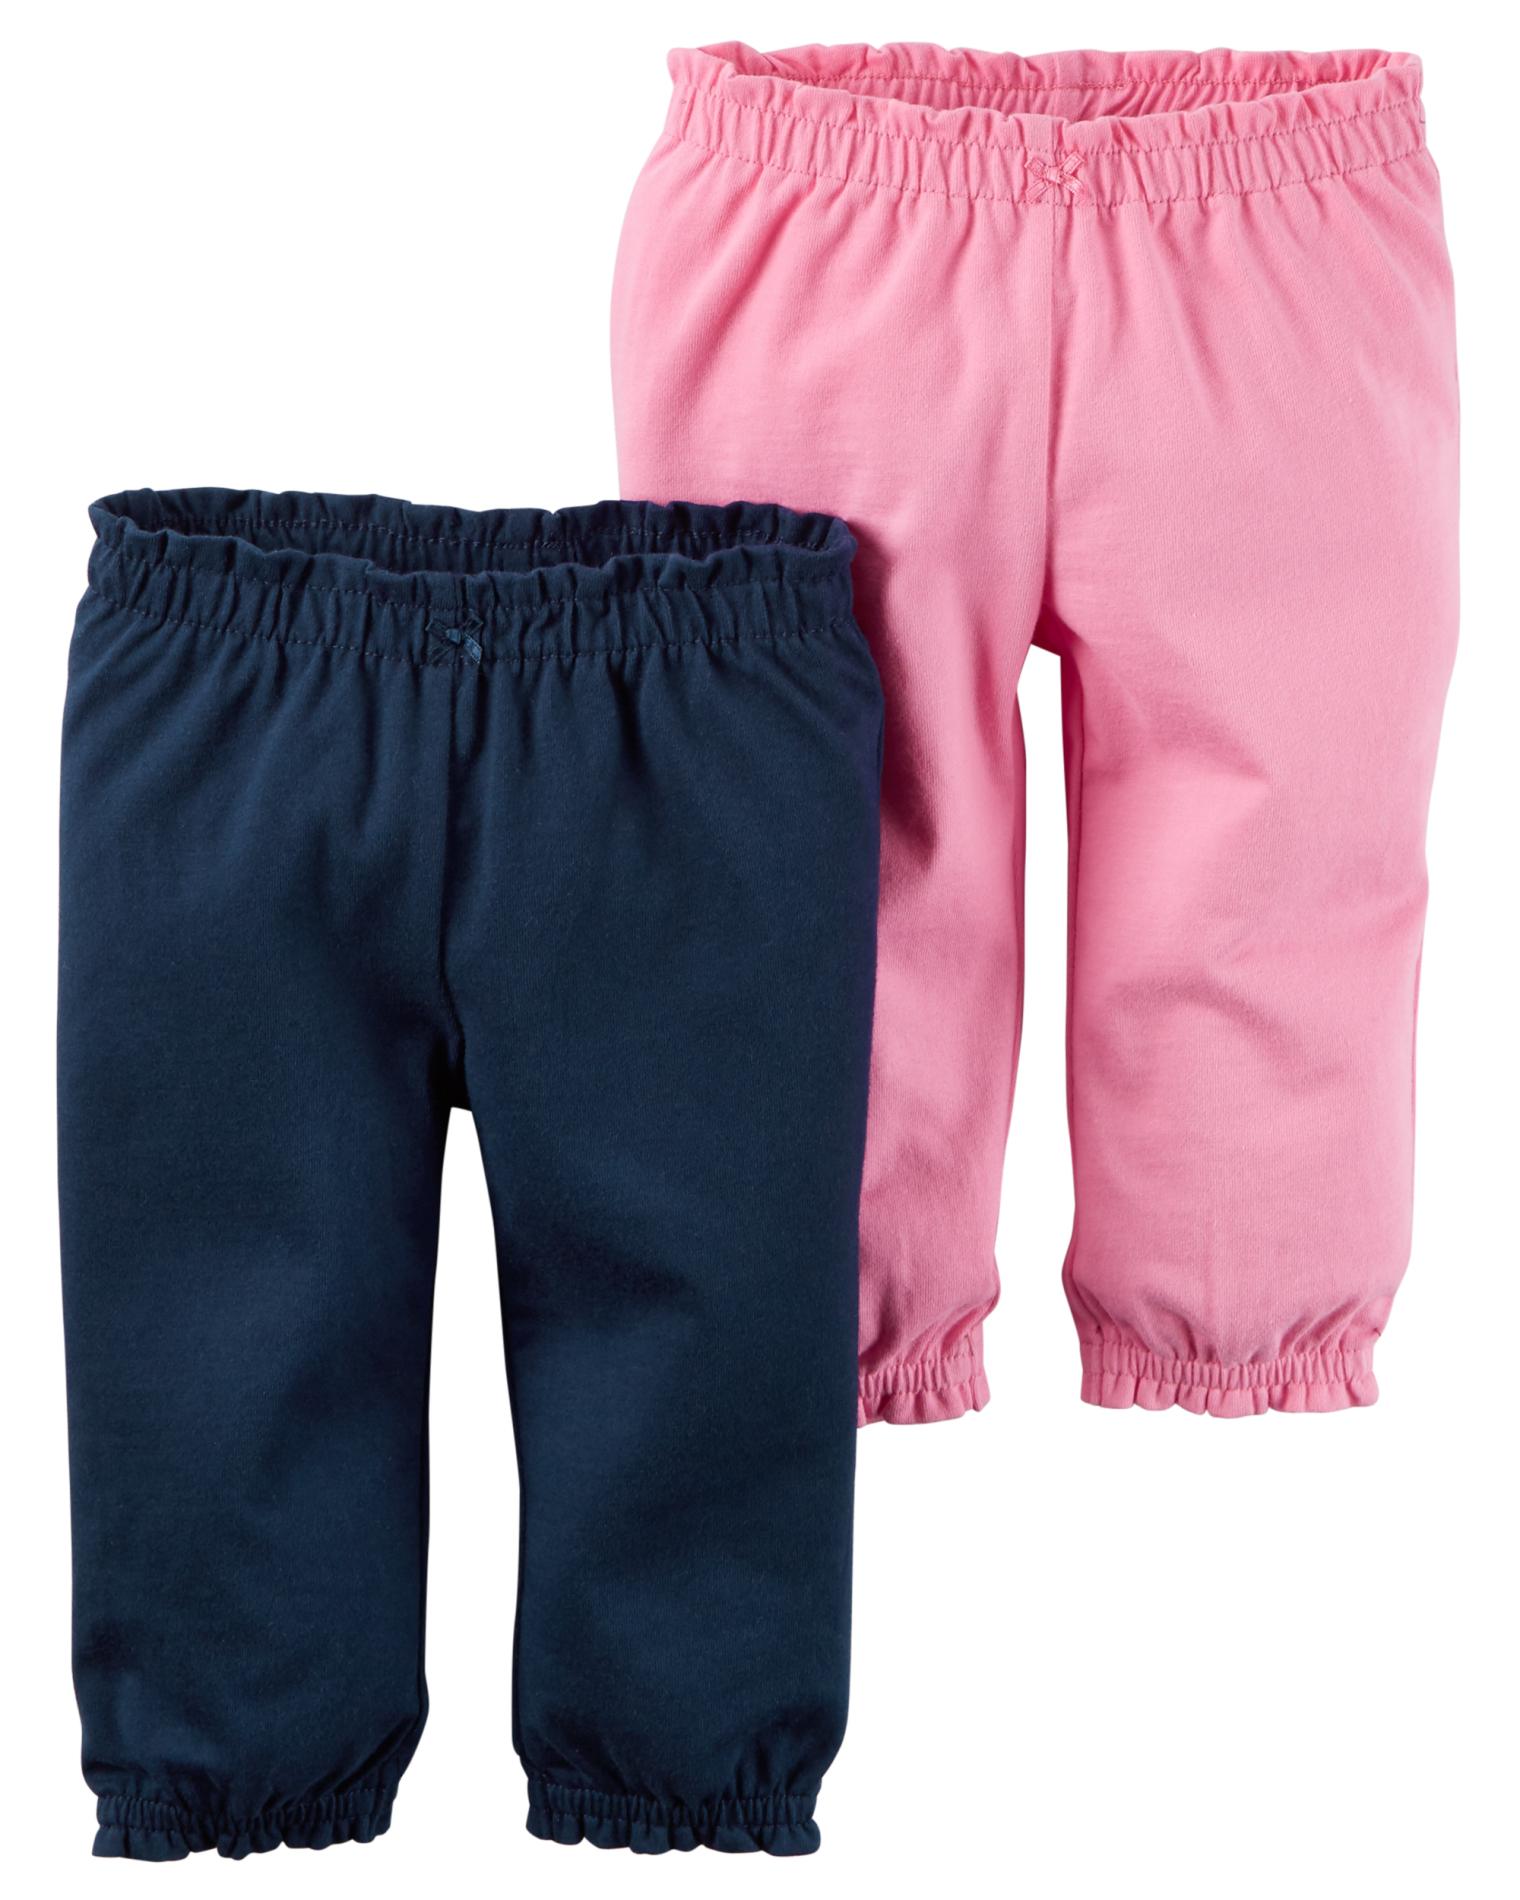 Carter's Newborn & Infant Girls' 2-Pack Knit Pants